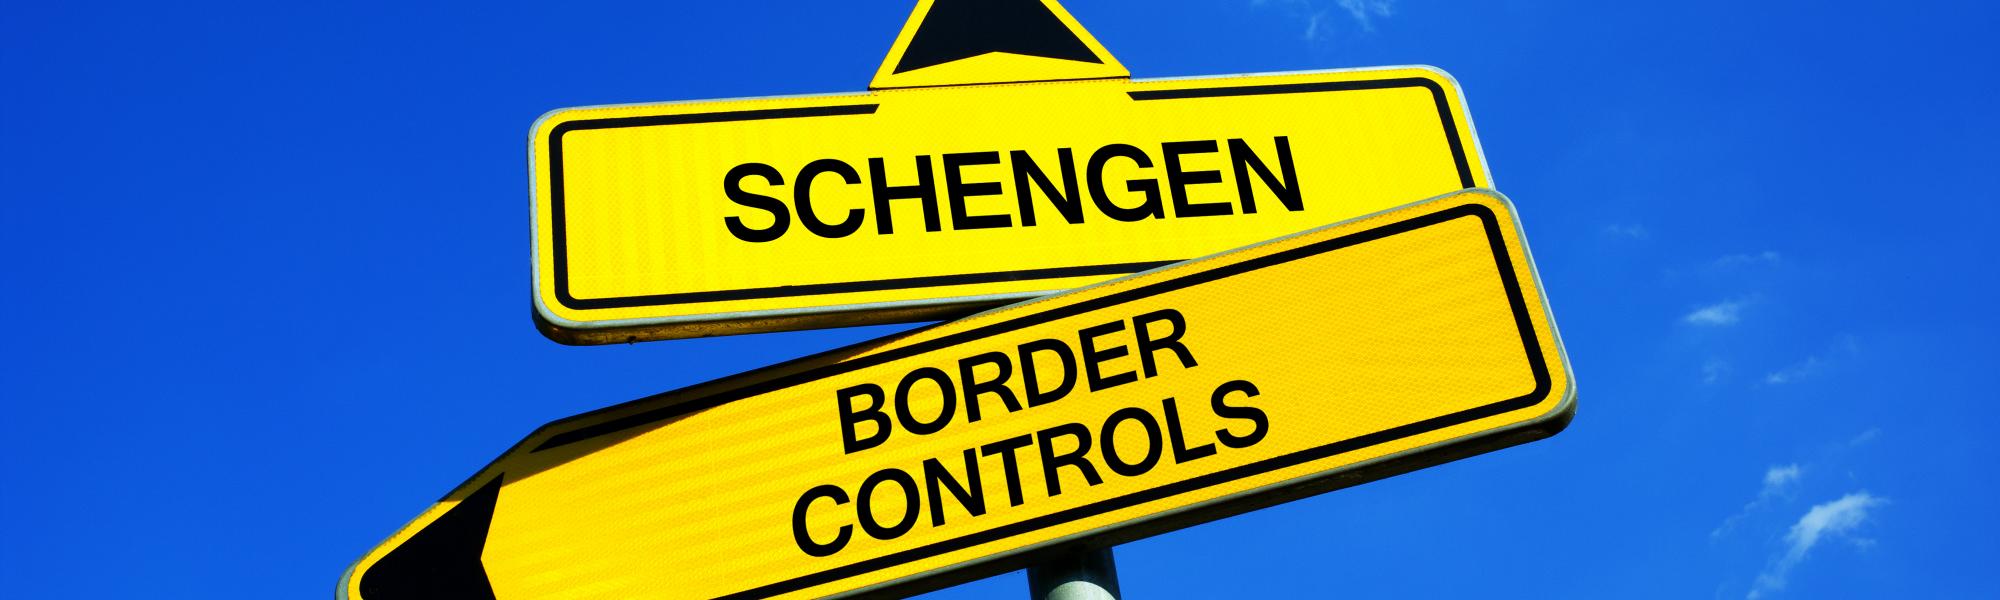 schengen border controls